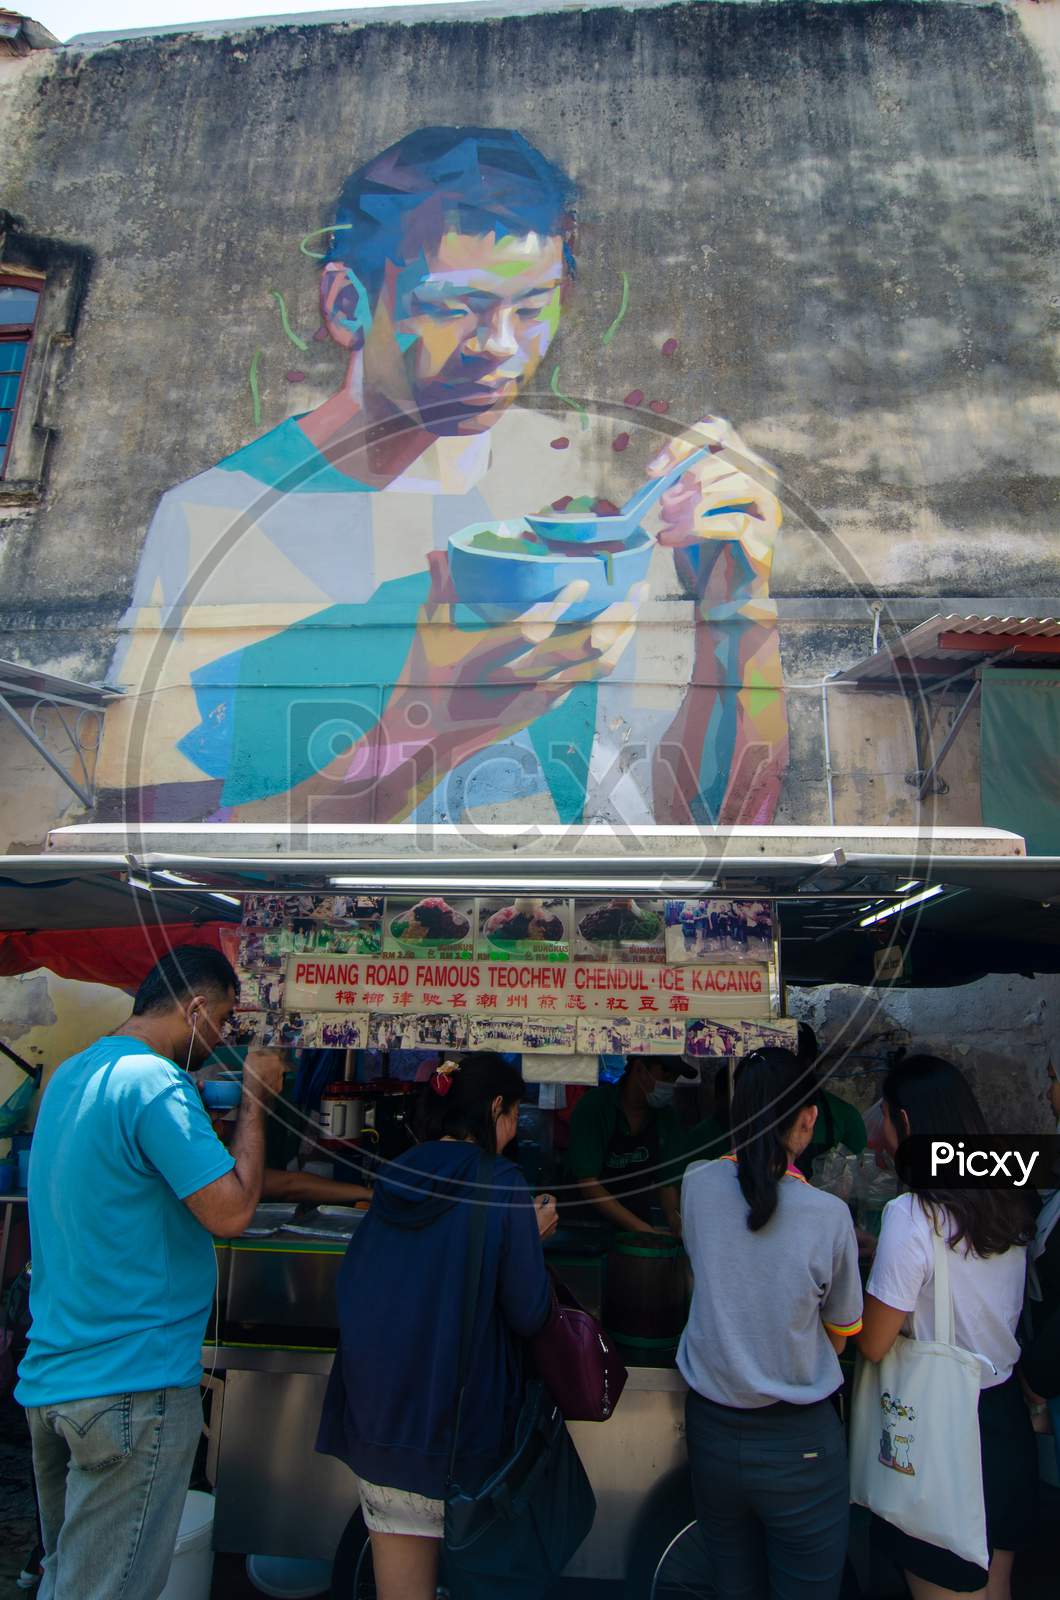 Cendol Mural Art And Stall At Penang Road